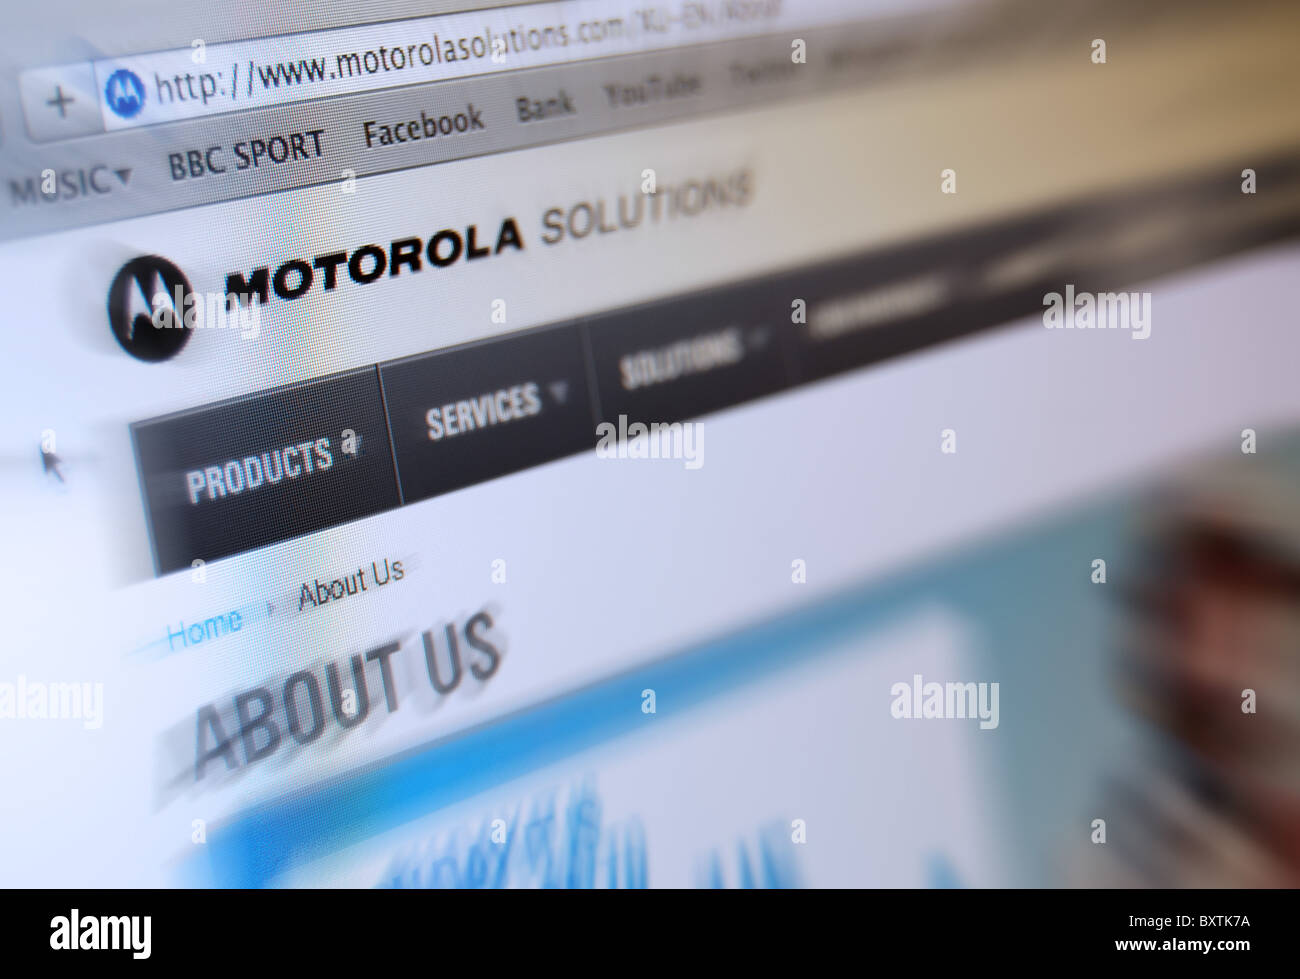 Photo Illustration of the Motorola Solutions website Stock Photo